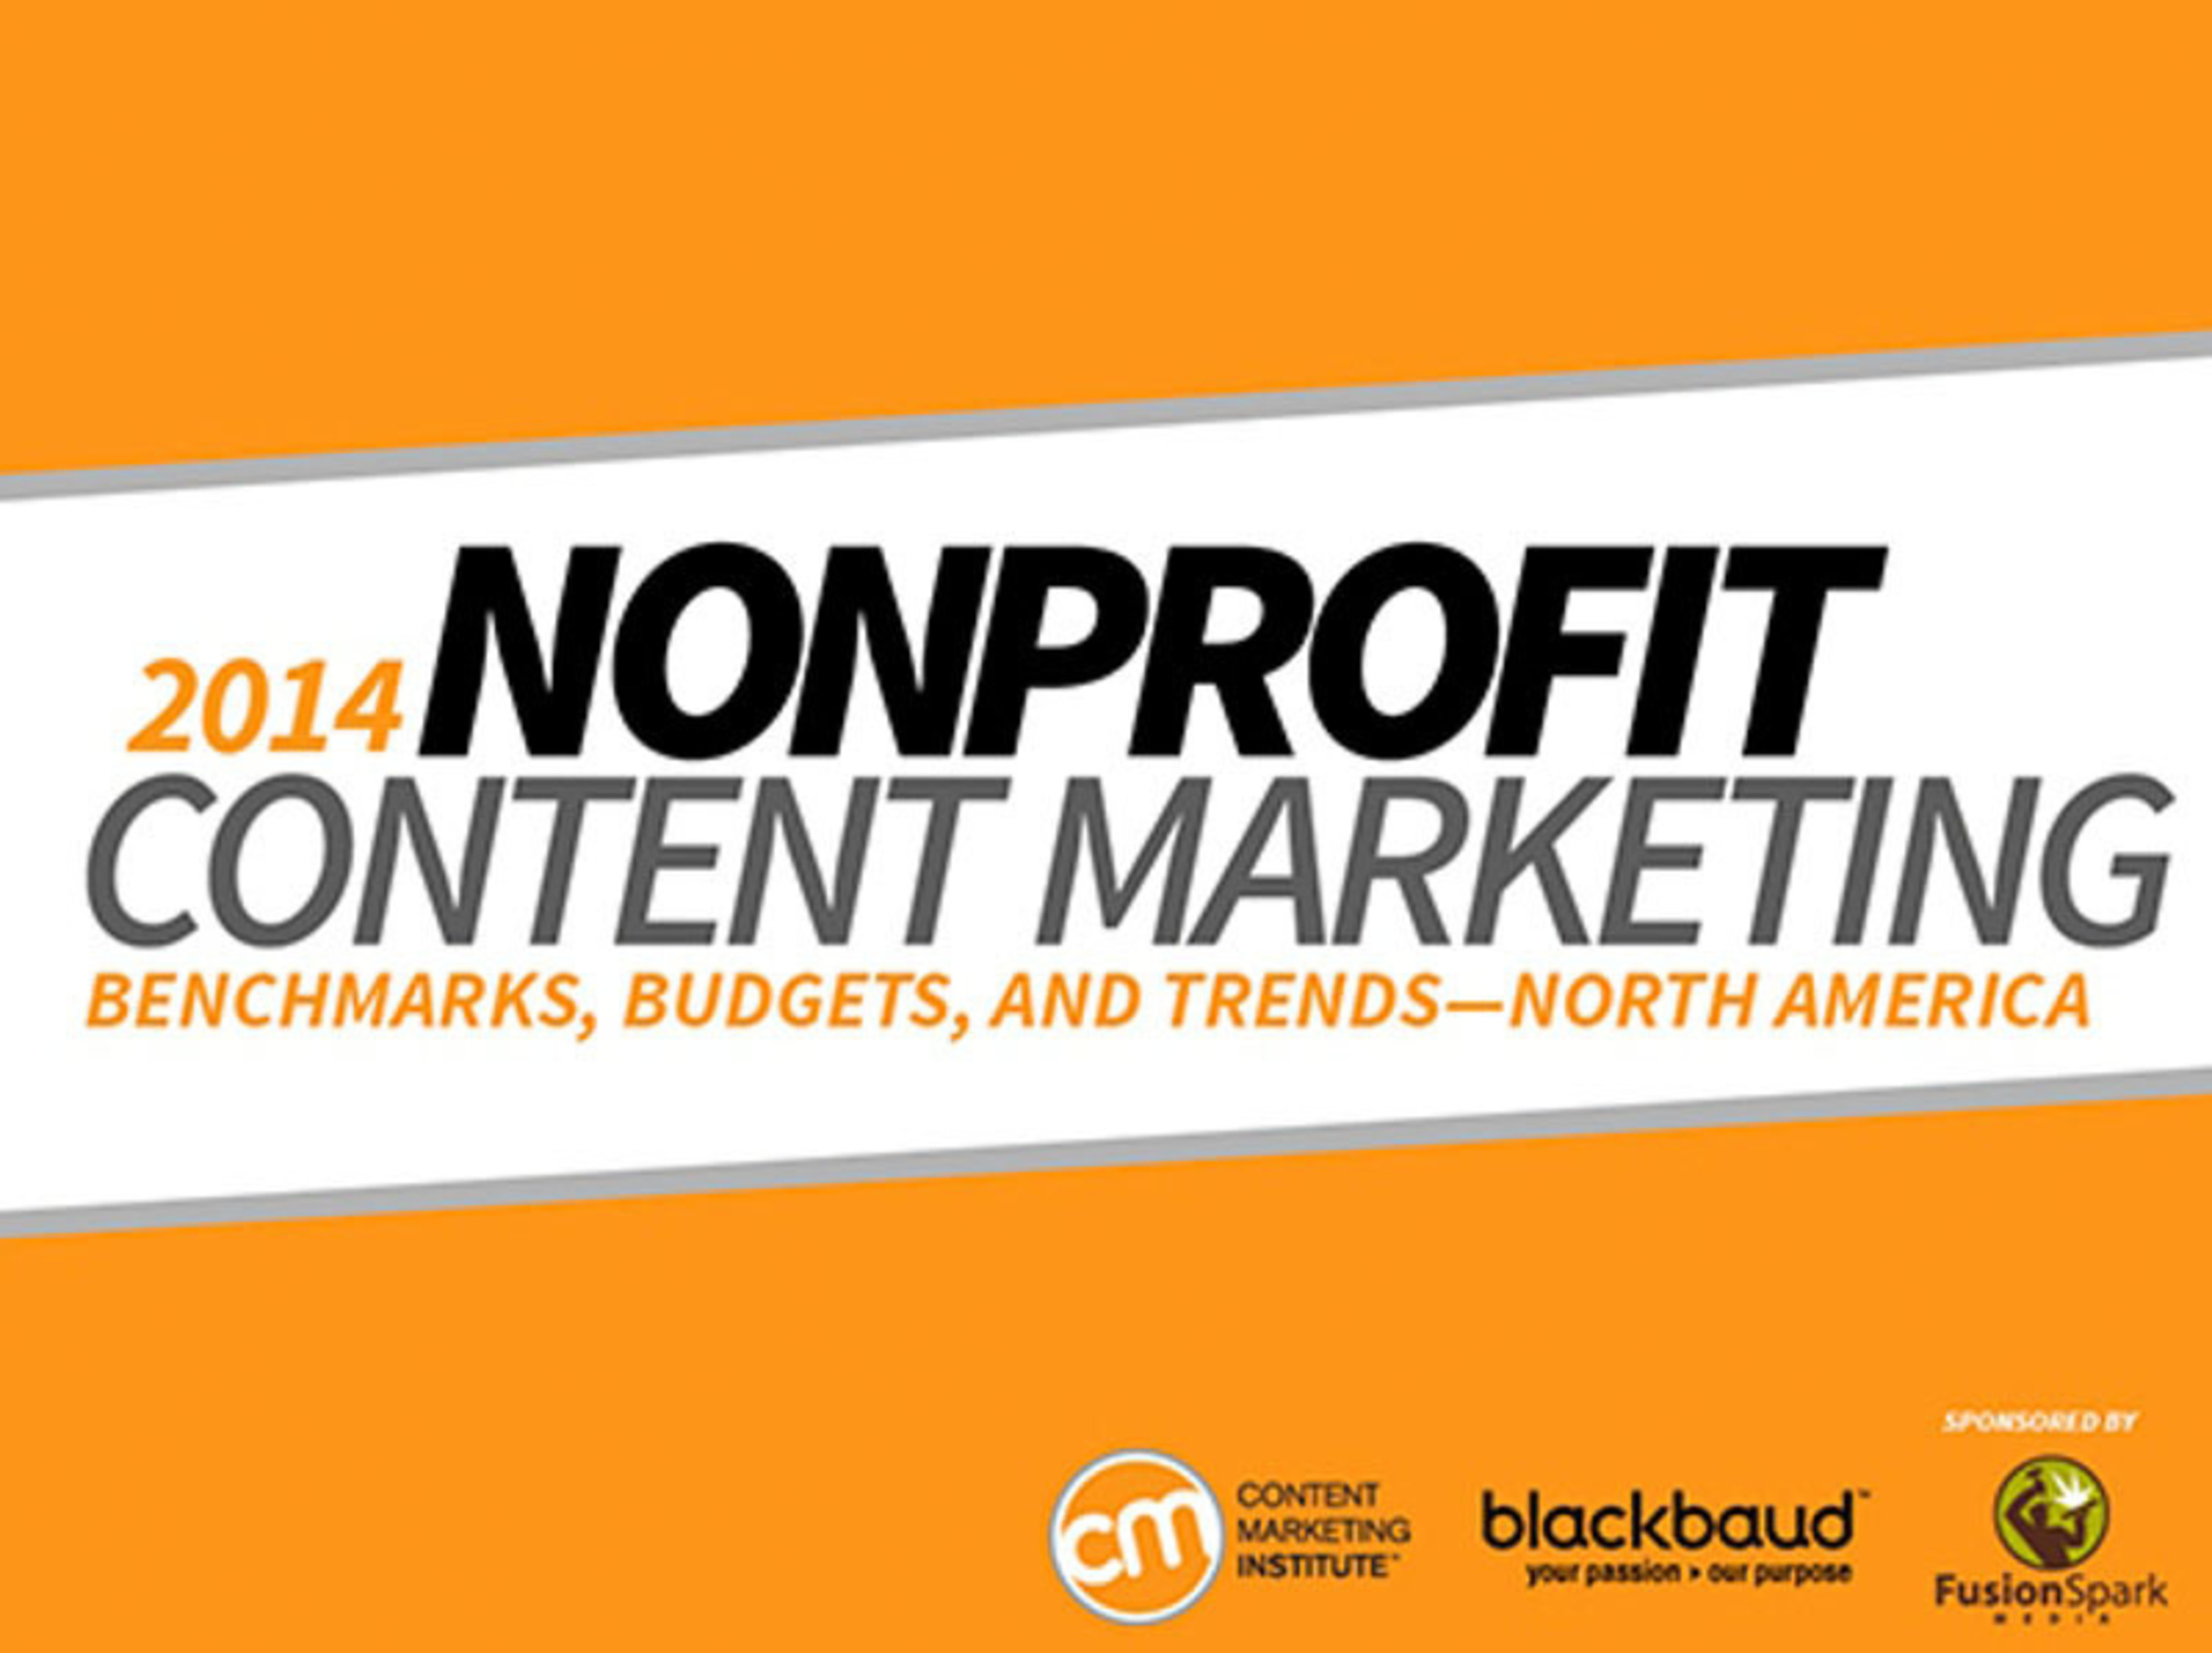 New Research Shows 92 Percent of Nonprofits Use Content Marketing. (PRNewsFoto/Content Marketing Institute) (PRNewsFoto/CONTENT MARKETING INSTITUTE)